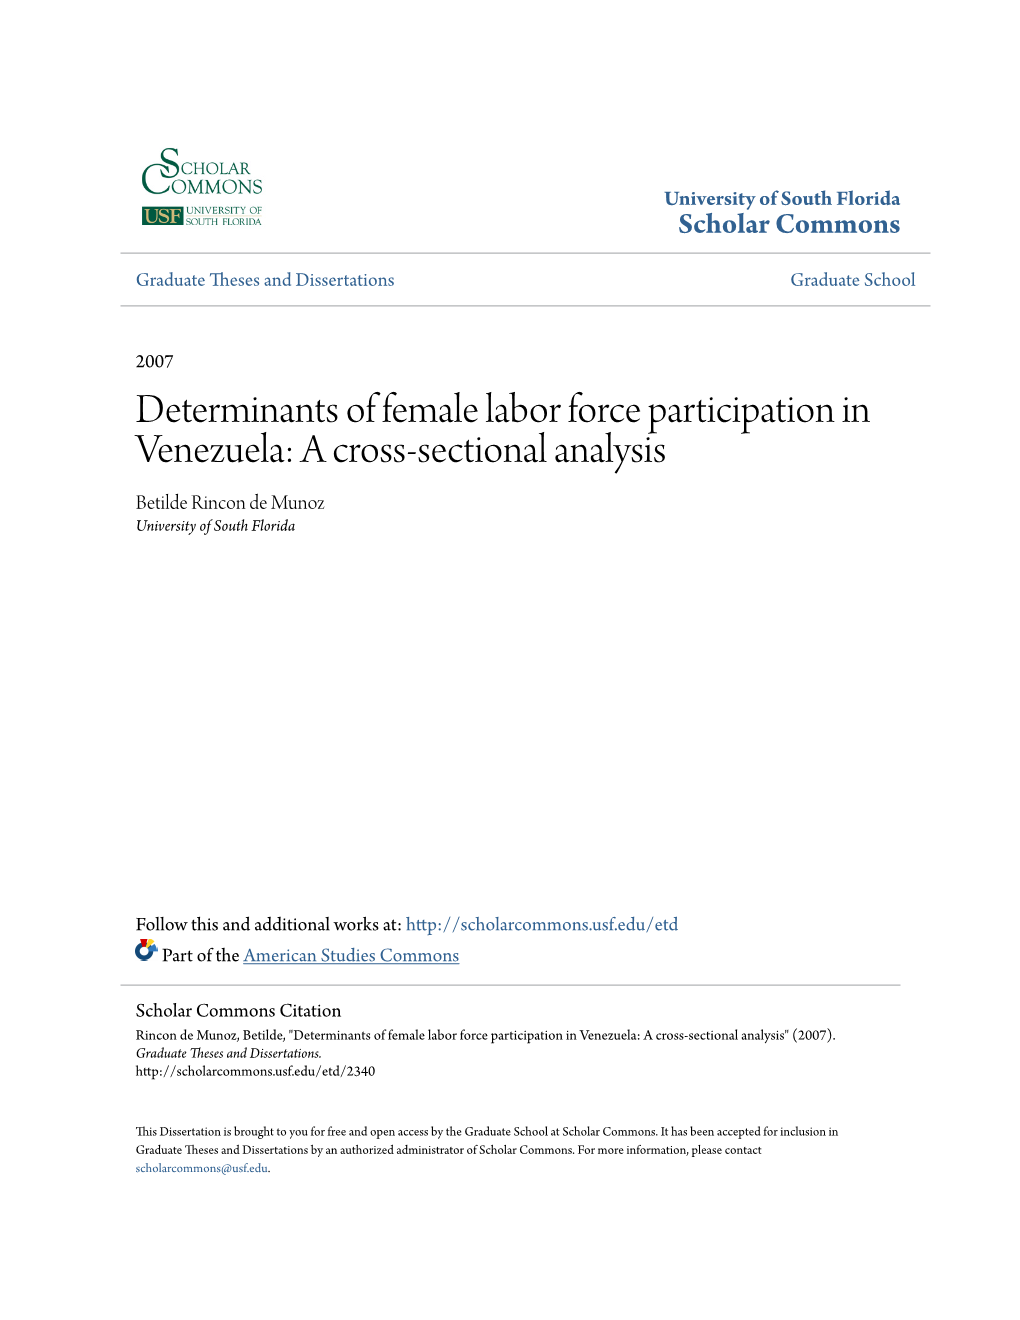 Determinants of Female Labor Force Participation in Venezuela: a Cross-Sectional Analysis Betilde Rincon De Munoz University of South Florida